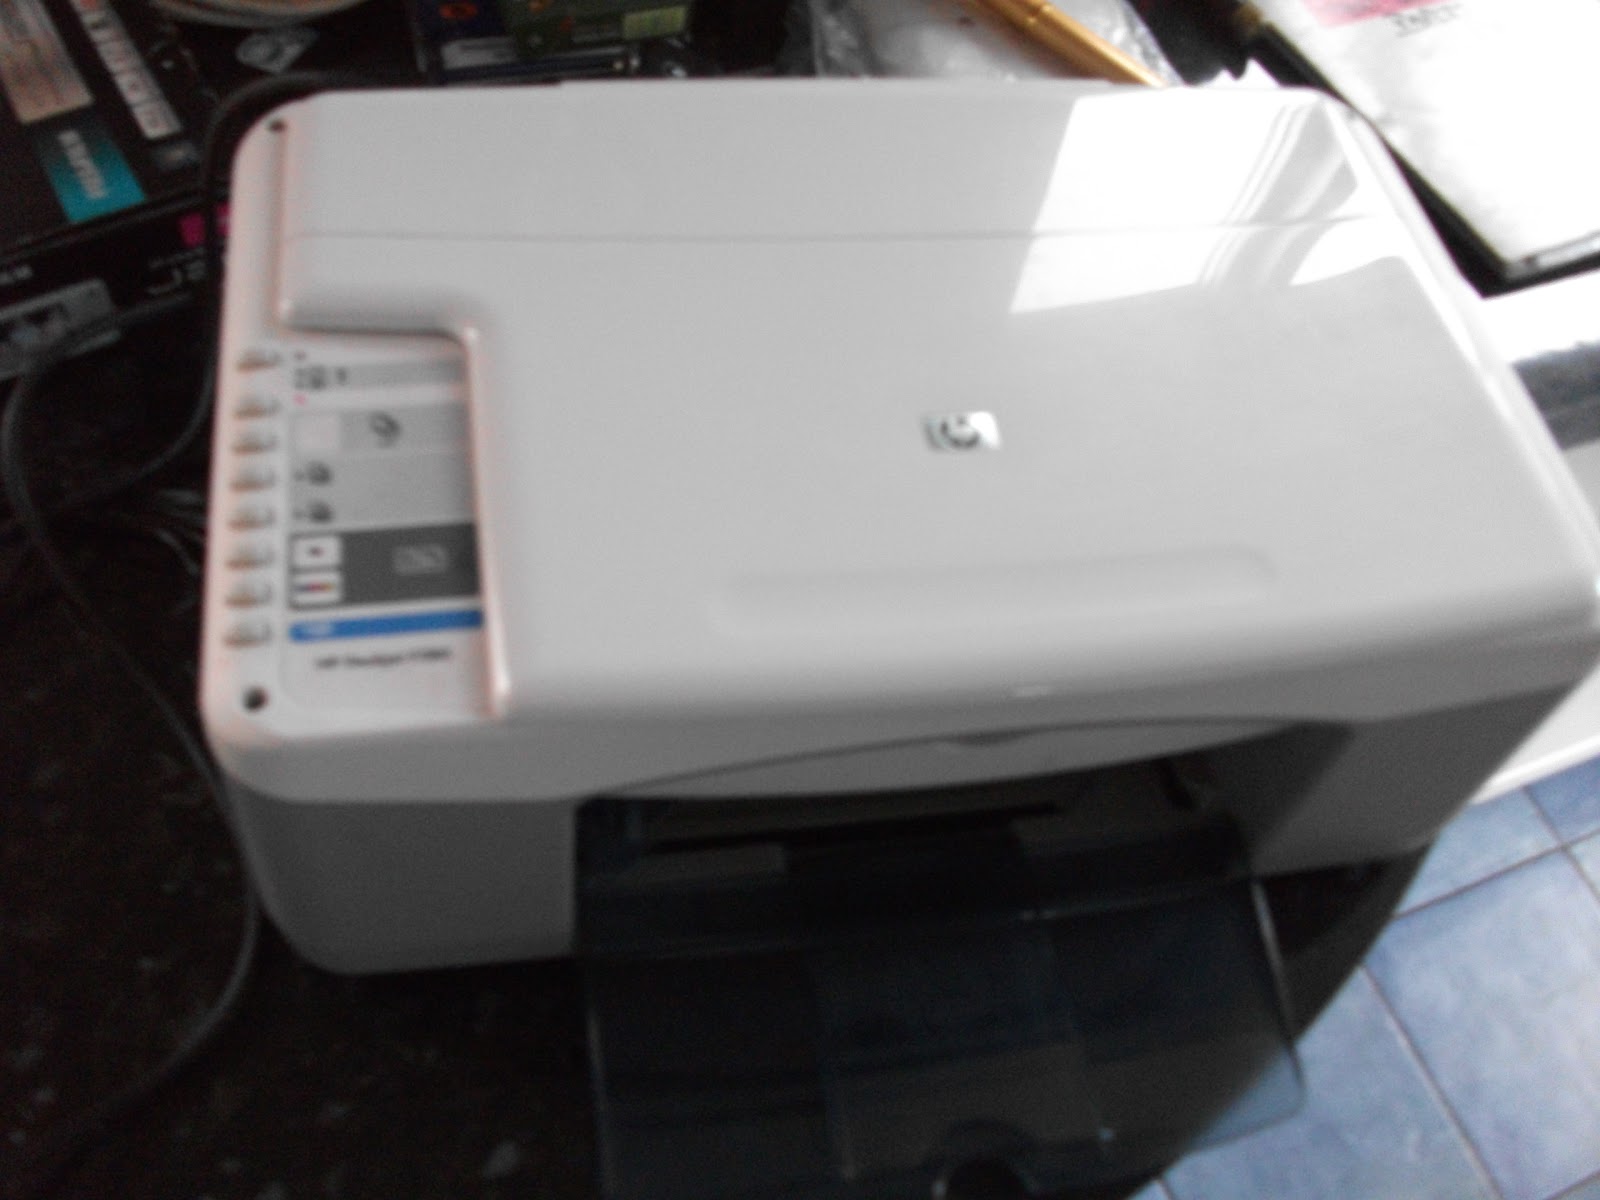 Cheap as Chips: HP Deskjet F380 All-in-One Printer